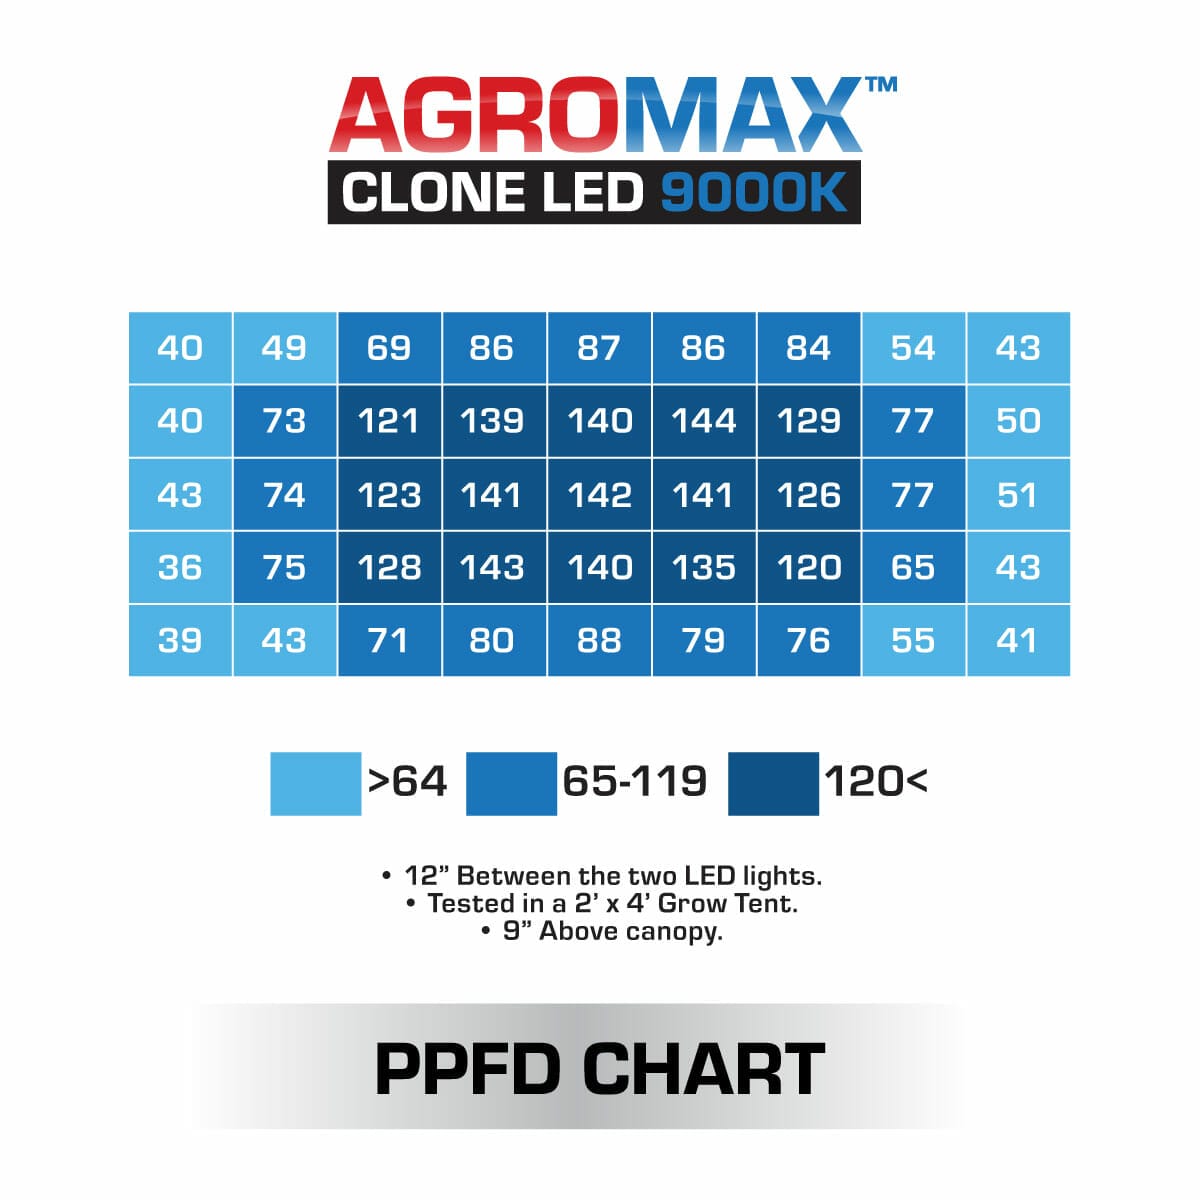 Agromax Clone 9000K LED PPFD Chart